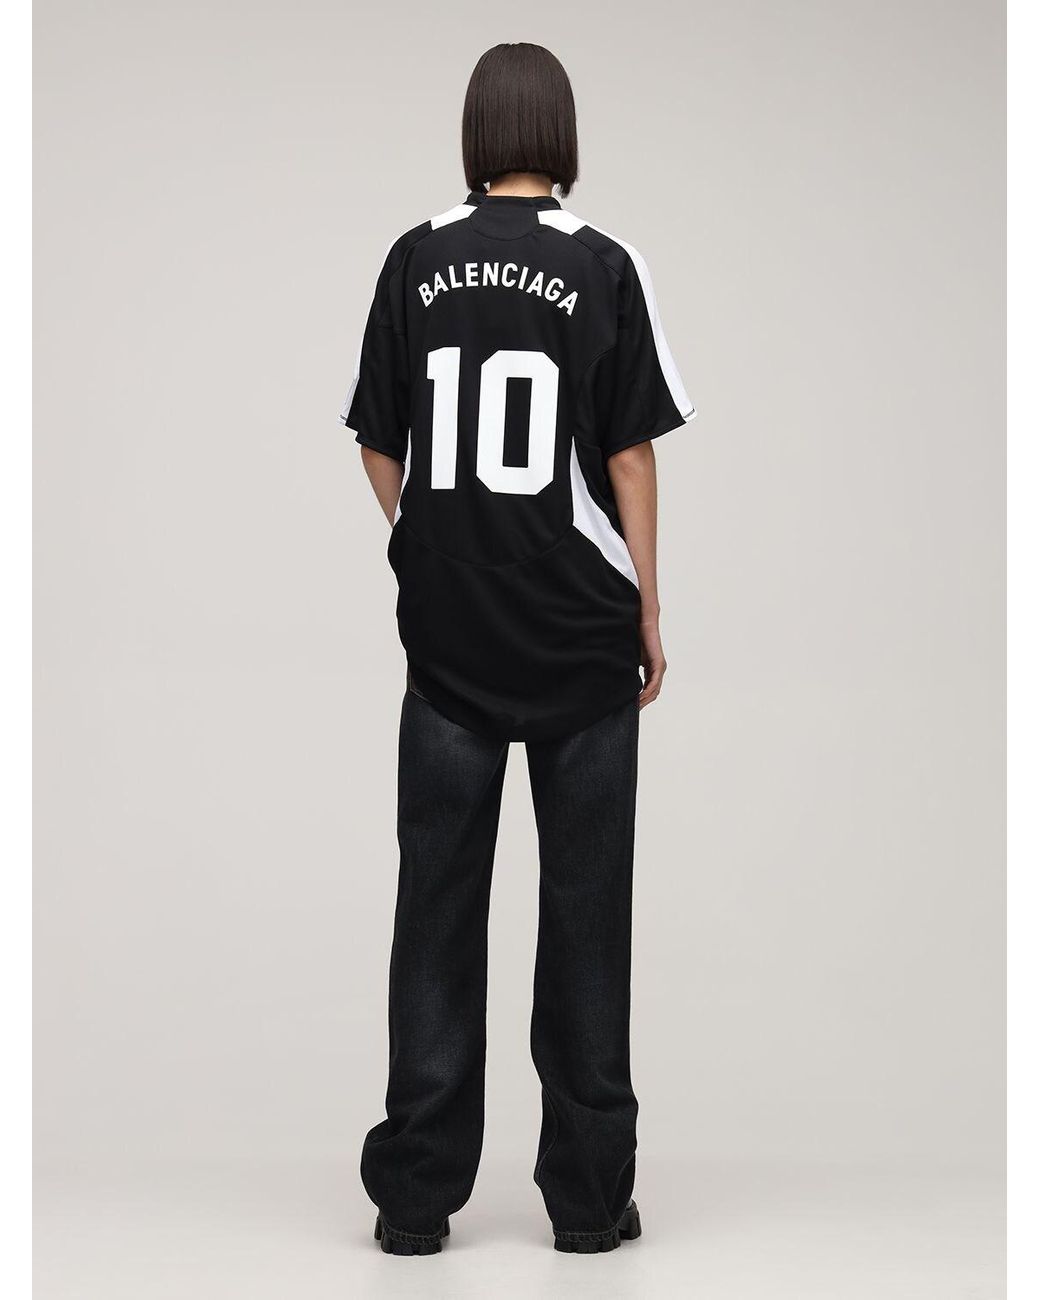 Balenciaga Oversized Logo Mesh Football T-shirt in Black/White (Black) |  Lyst